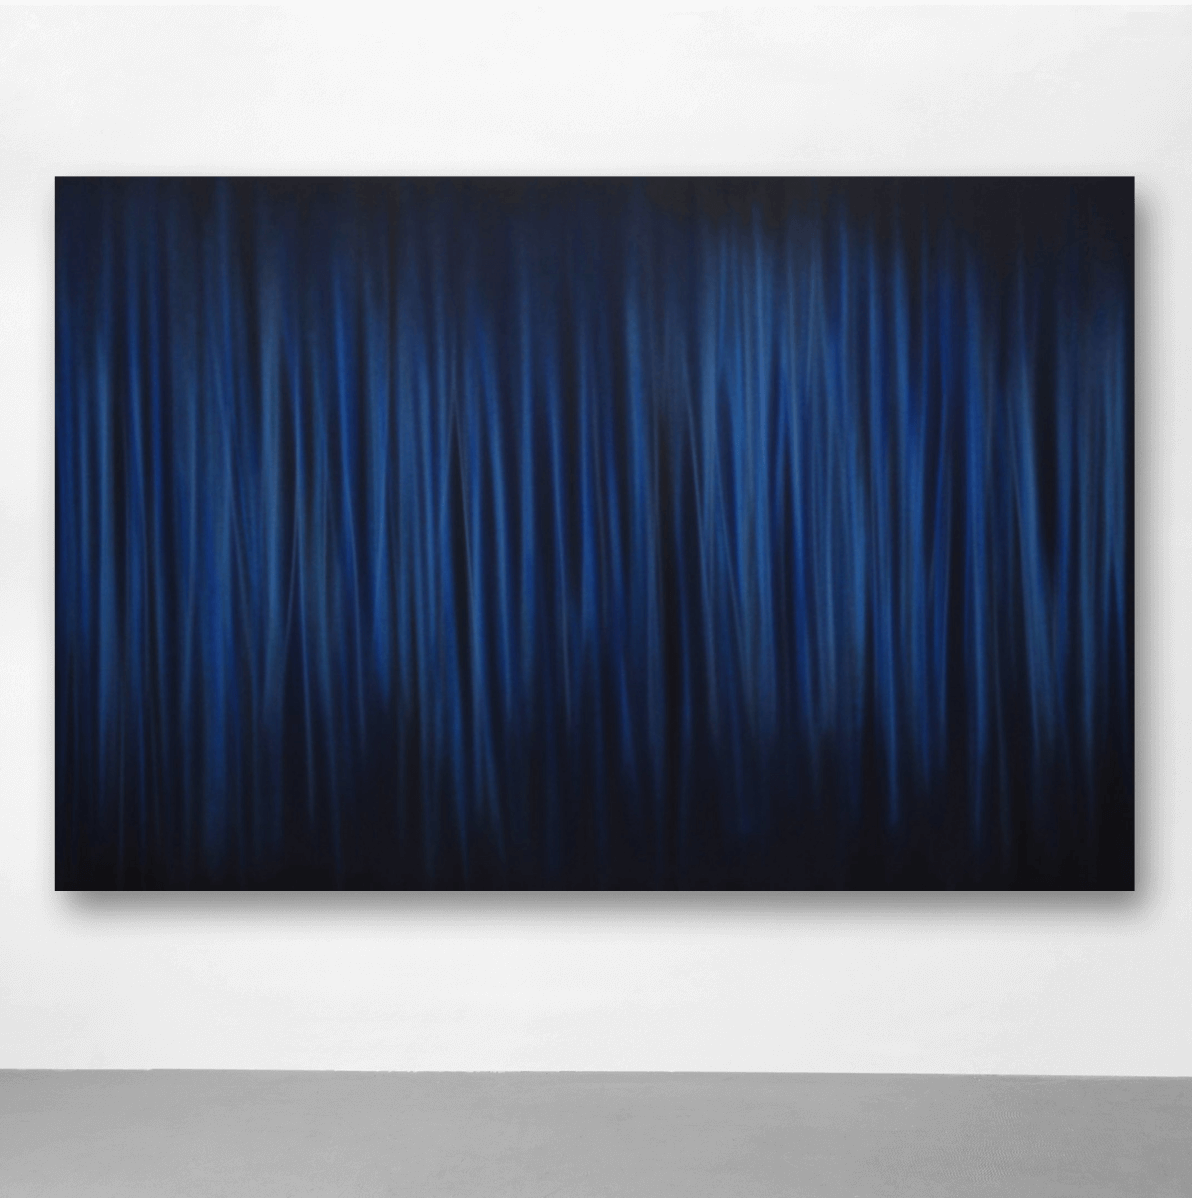 Nicolas Delprat,Coming soon 5, 2013, acrylique sur toile, 194 x 129.5 cm, © Courtesy galerie Maubert.